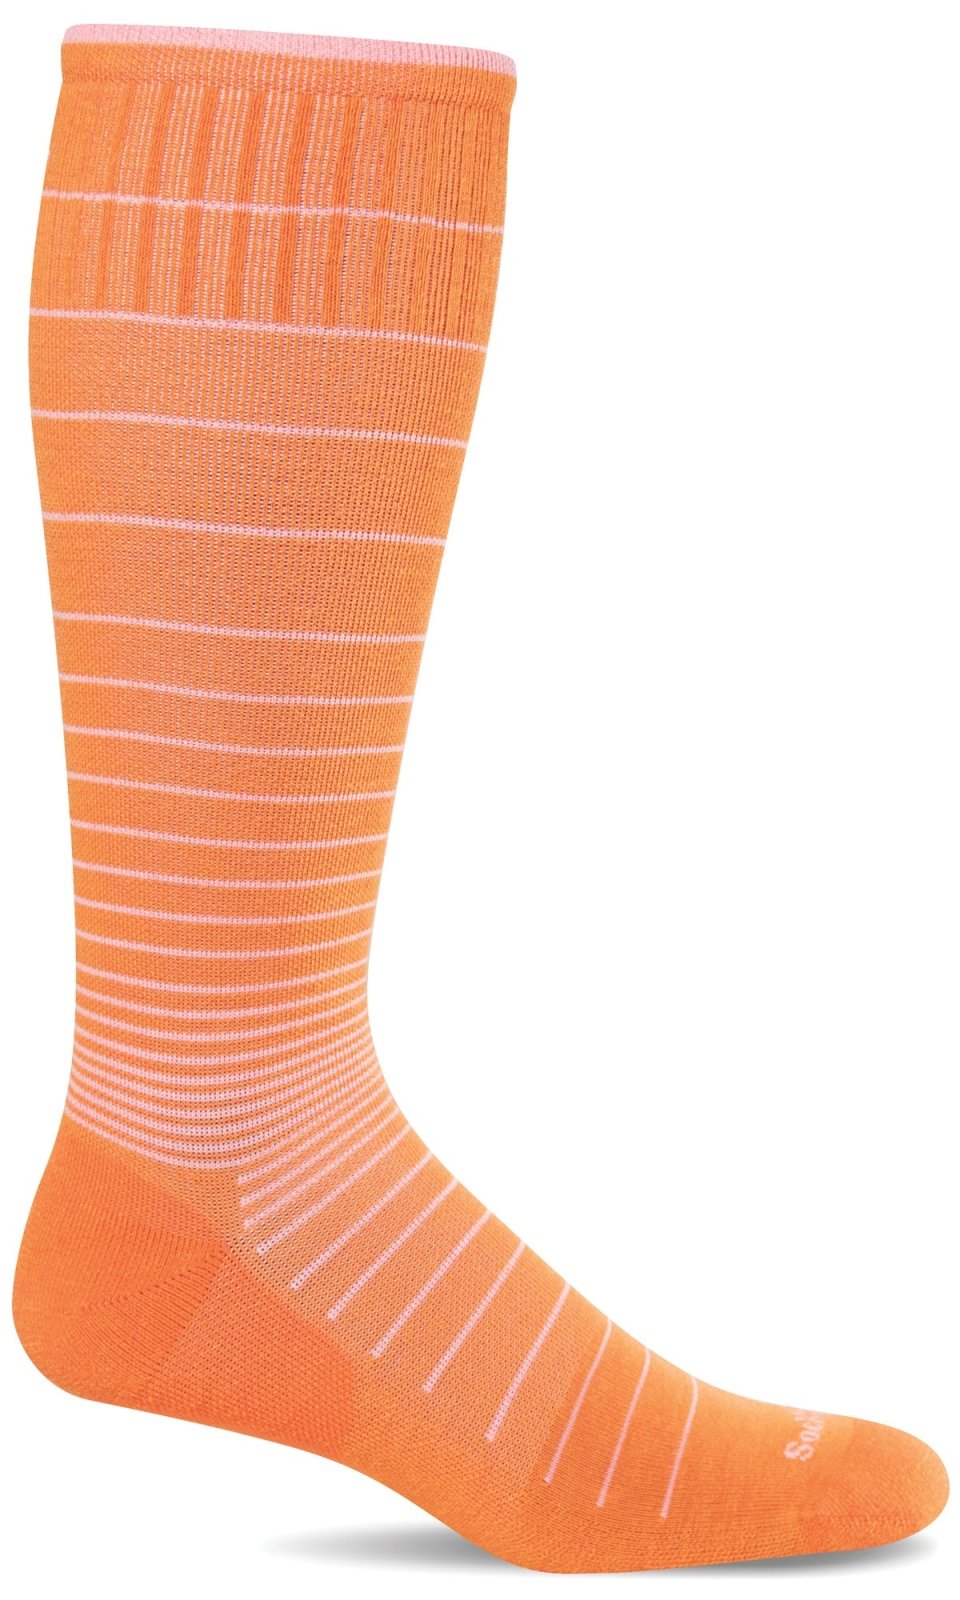 Women's Circulator | Moderate Graduated Compression Socks - Merino Wool Lifestyle Compression - Sockwell